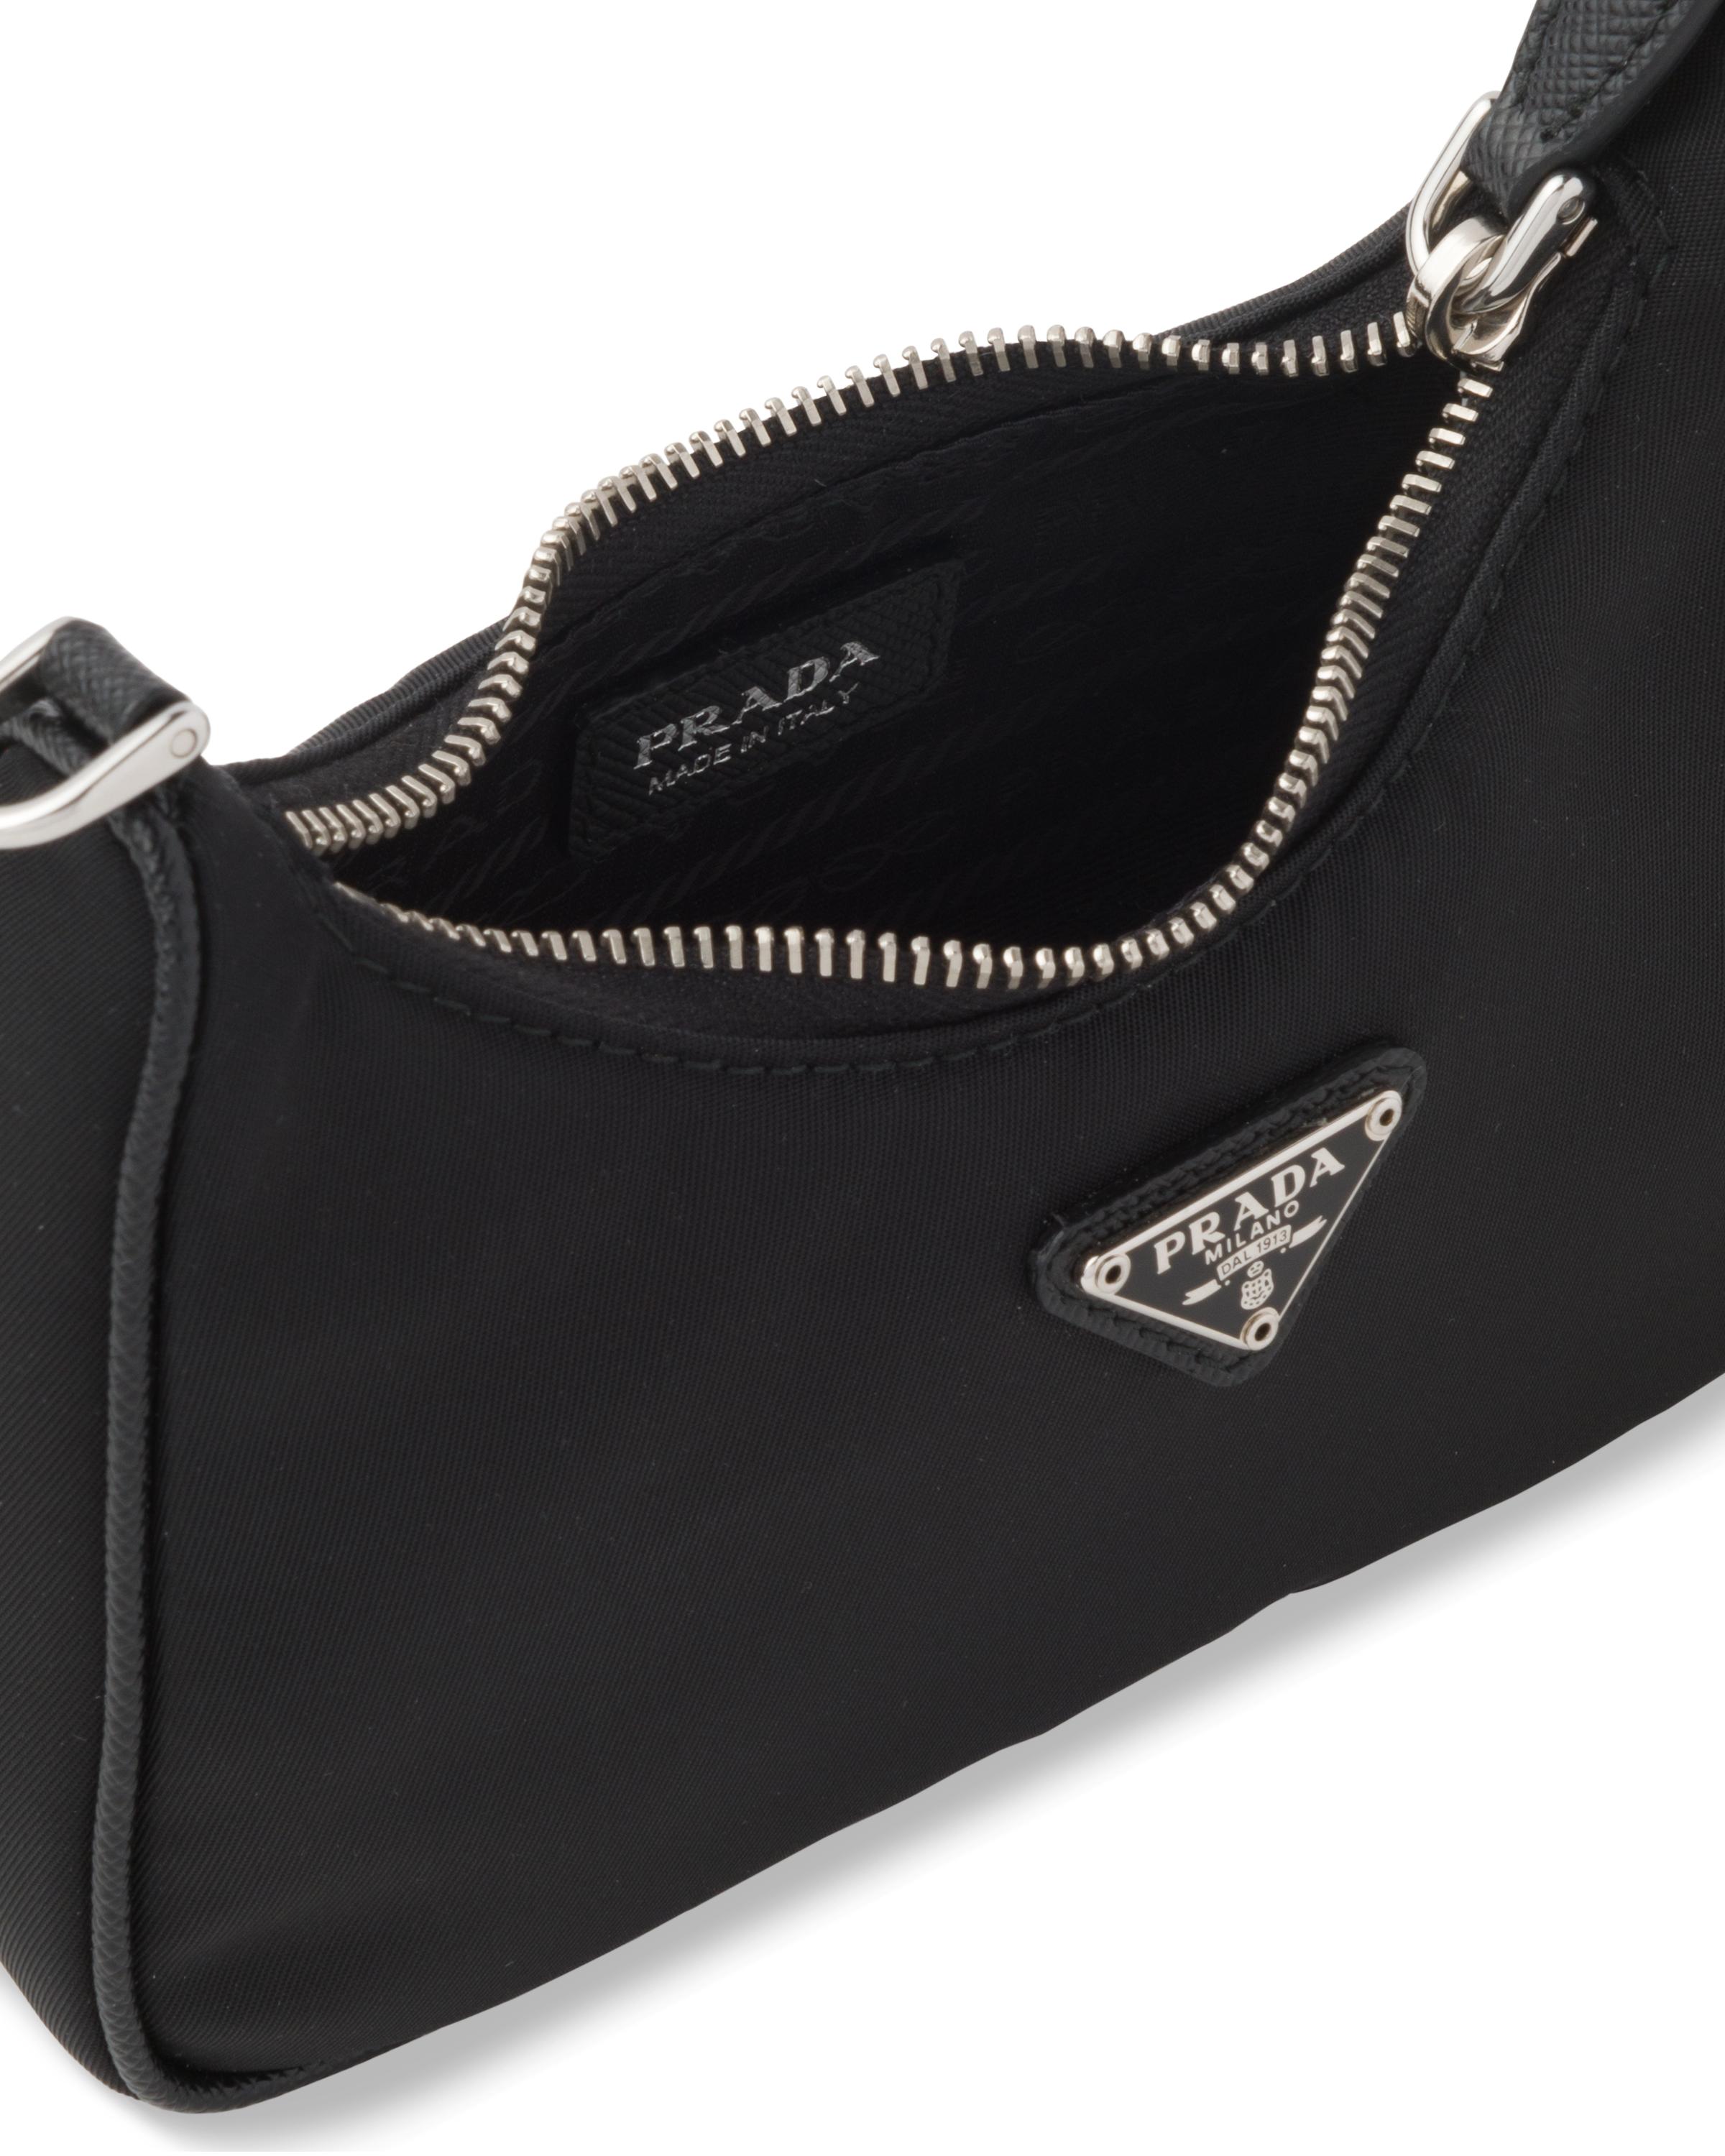 Prada Re-edition Nylon Mini Shoulder Bag in Black | Lyst